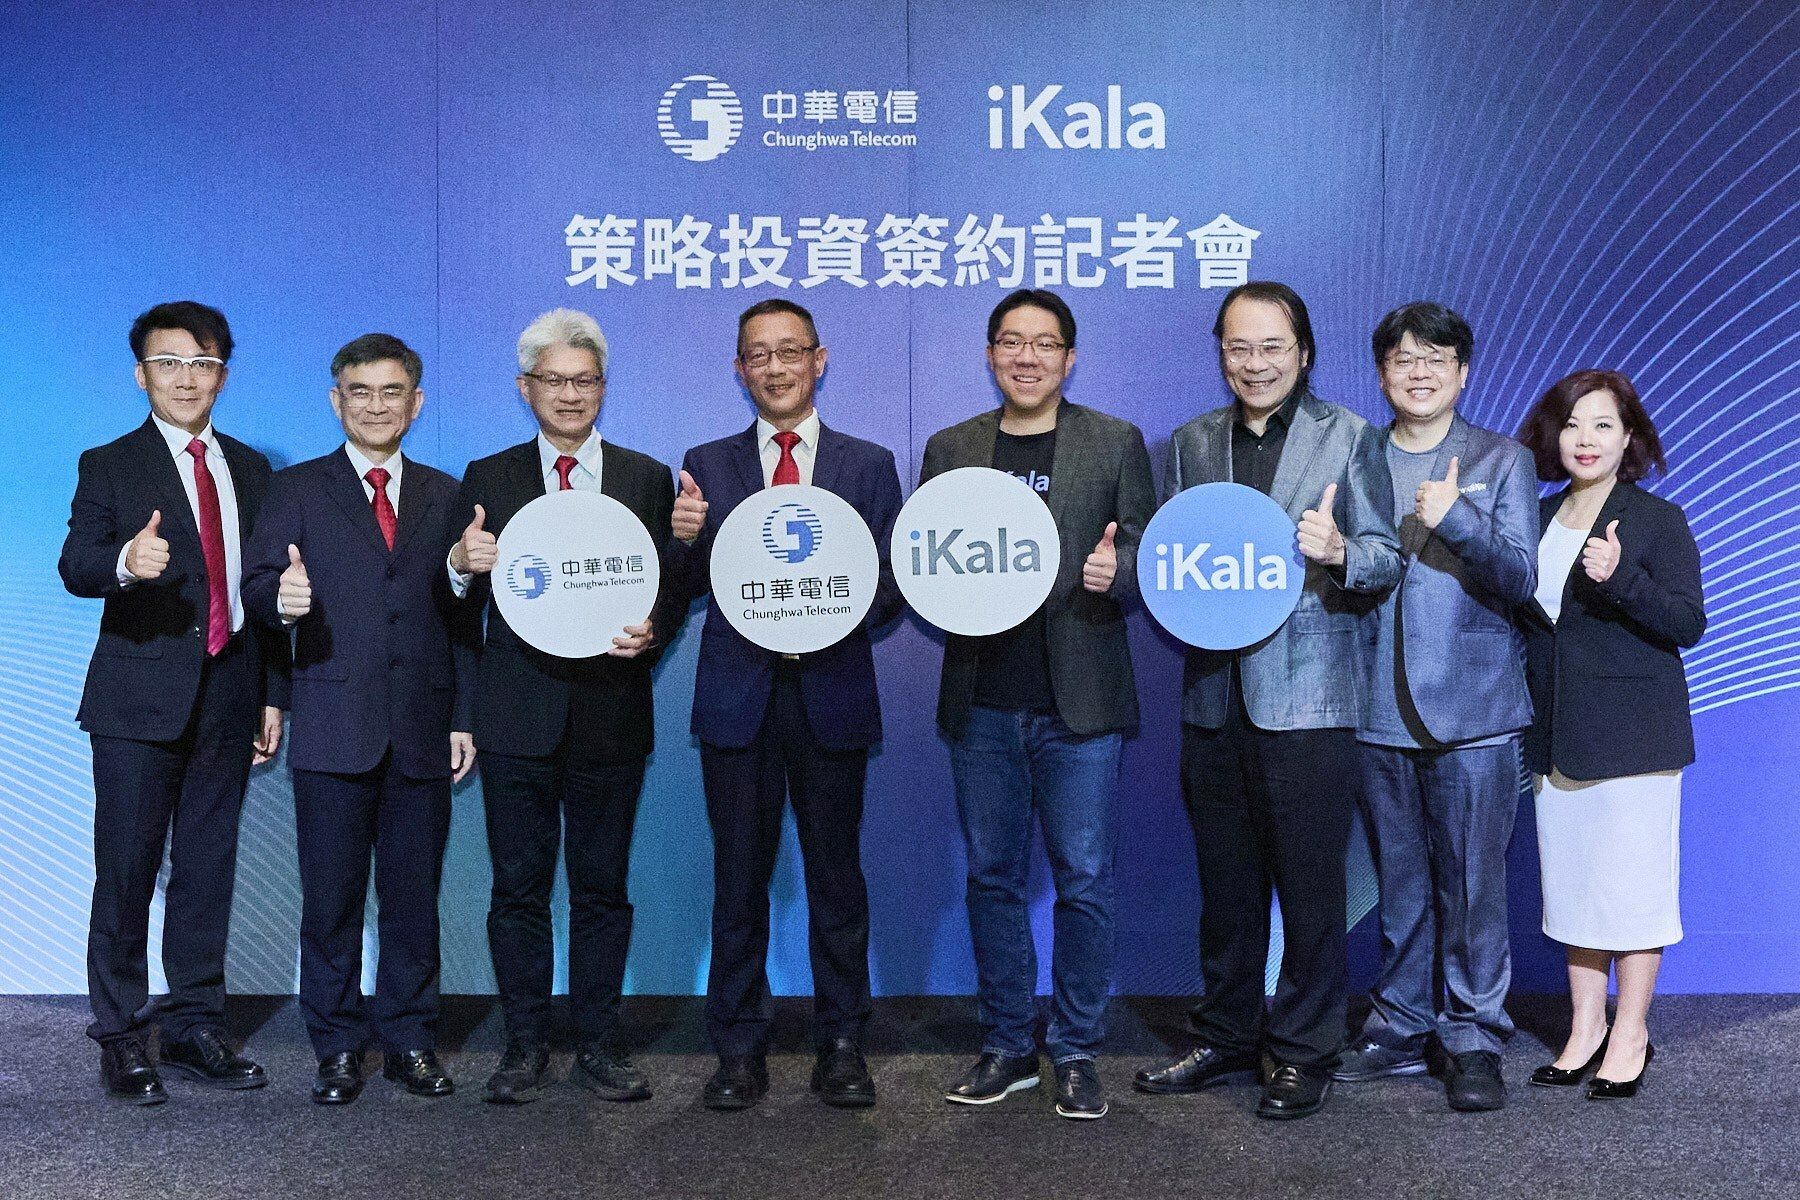 China Digest: MarTech firm iKala raises $20.8m; Sungrow New Energy secures $69.2m